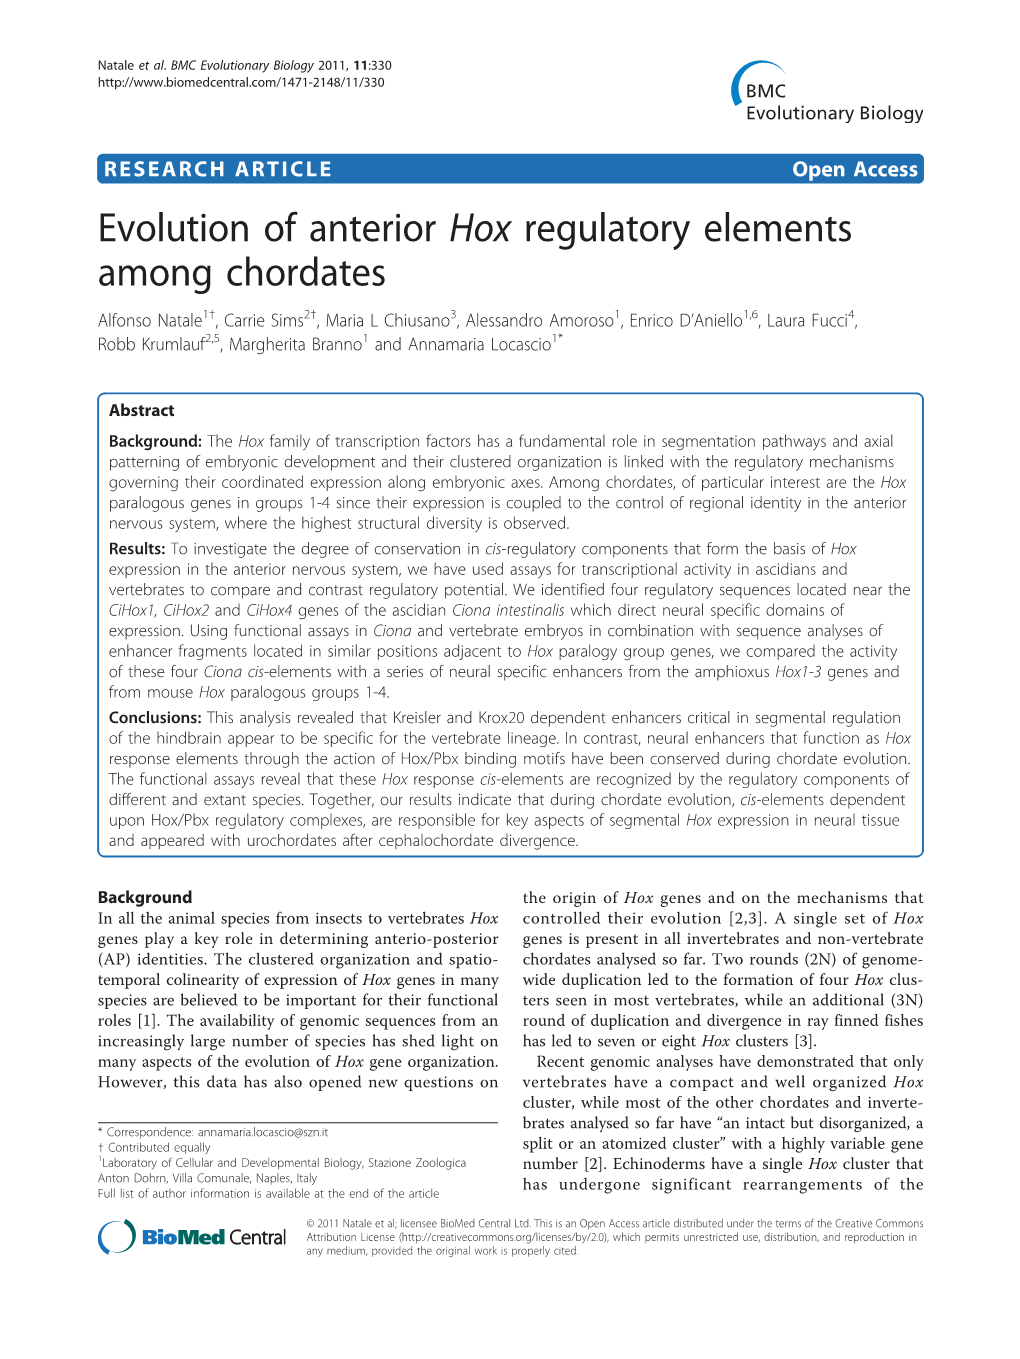 Evolution of Anterior Hox Regulatory Elements Among Chordates